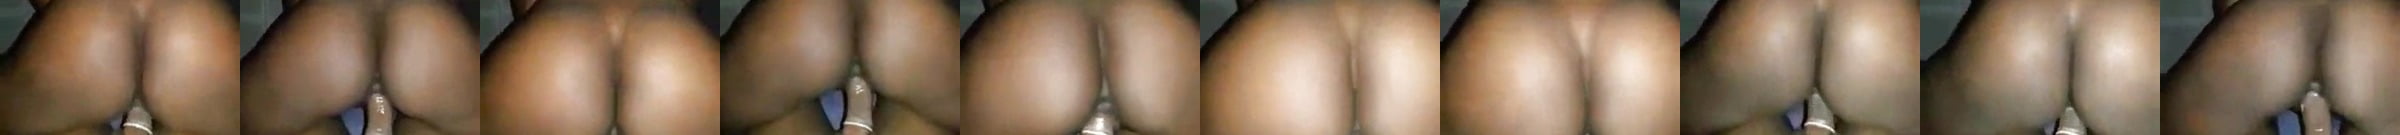 Featured Webcam Porn Videos 498 Xhamster